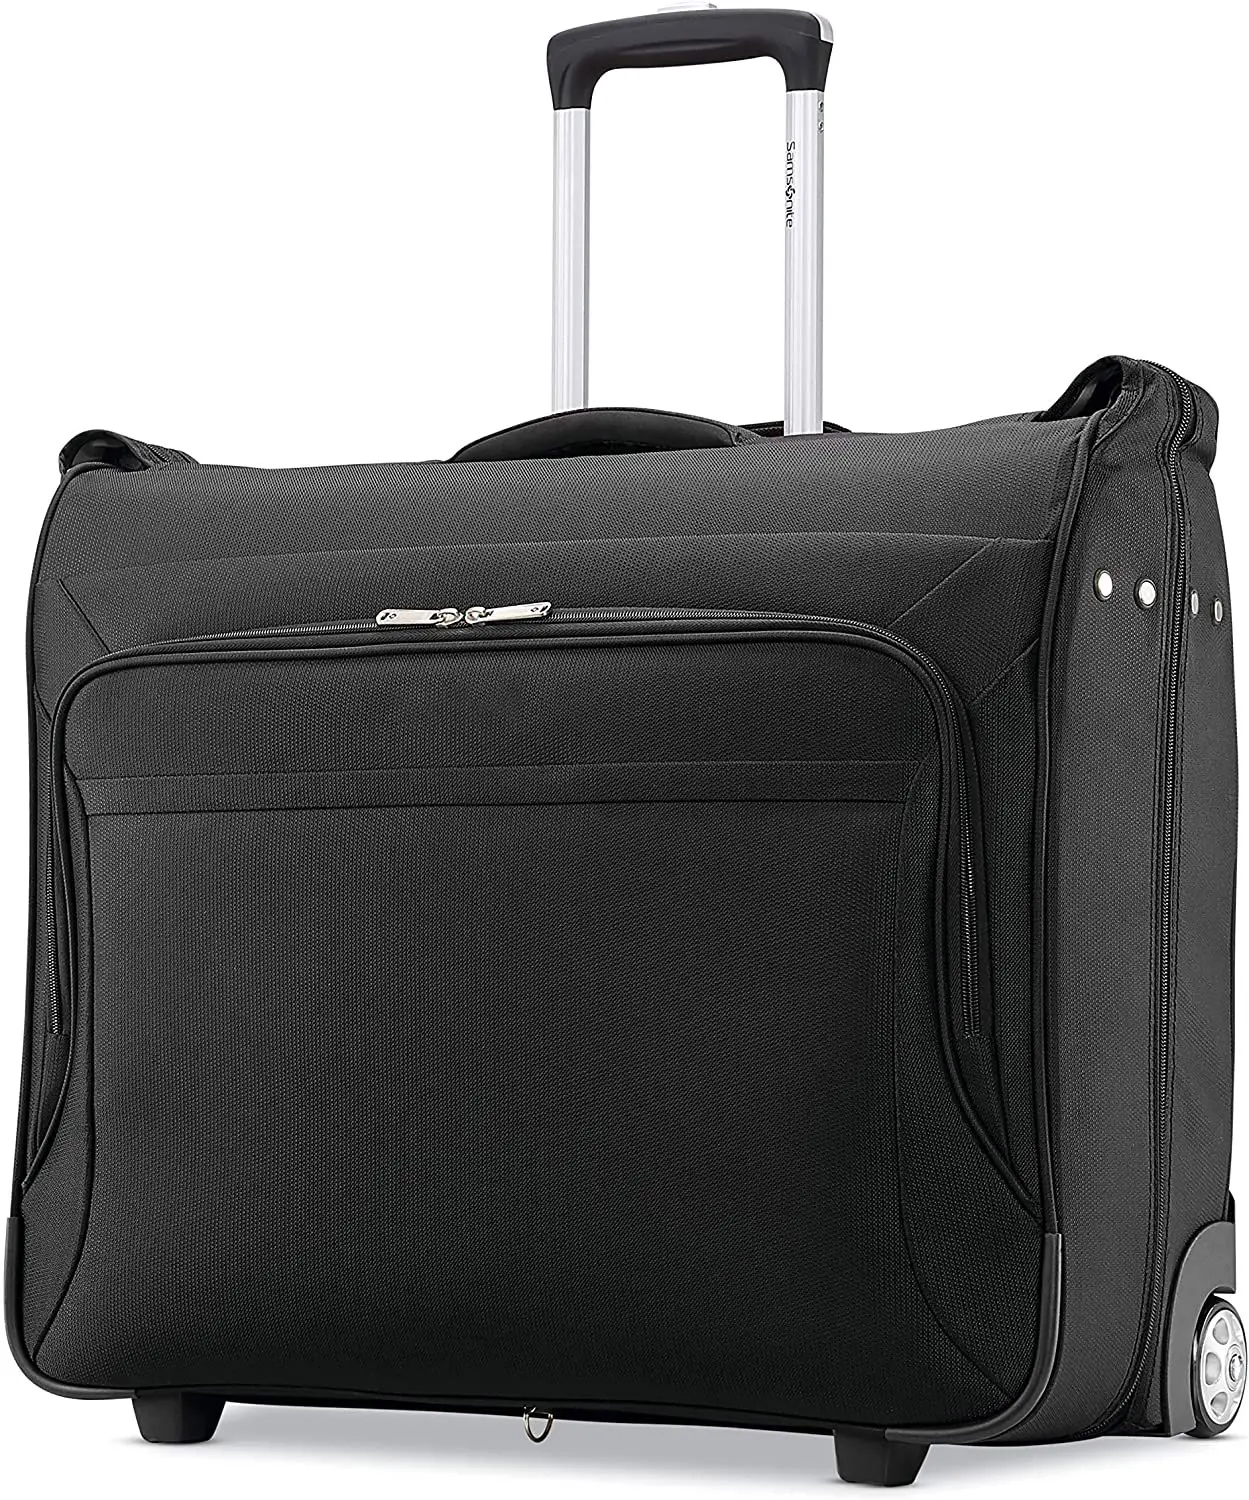 Hexin Gepäcks pinner an Bord des Gepäcks tragen aufrecht Kleider sack Business Fabric Soft Air Plane Anzug Kleider säcke Trolley Bag